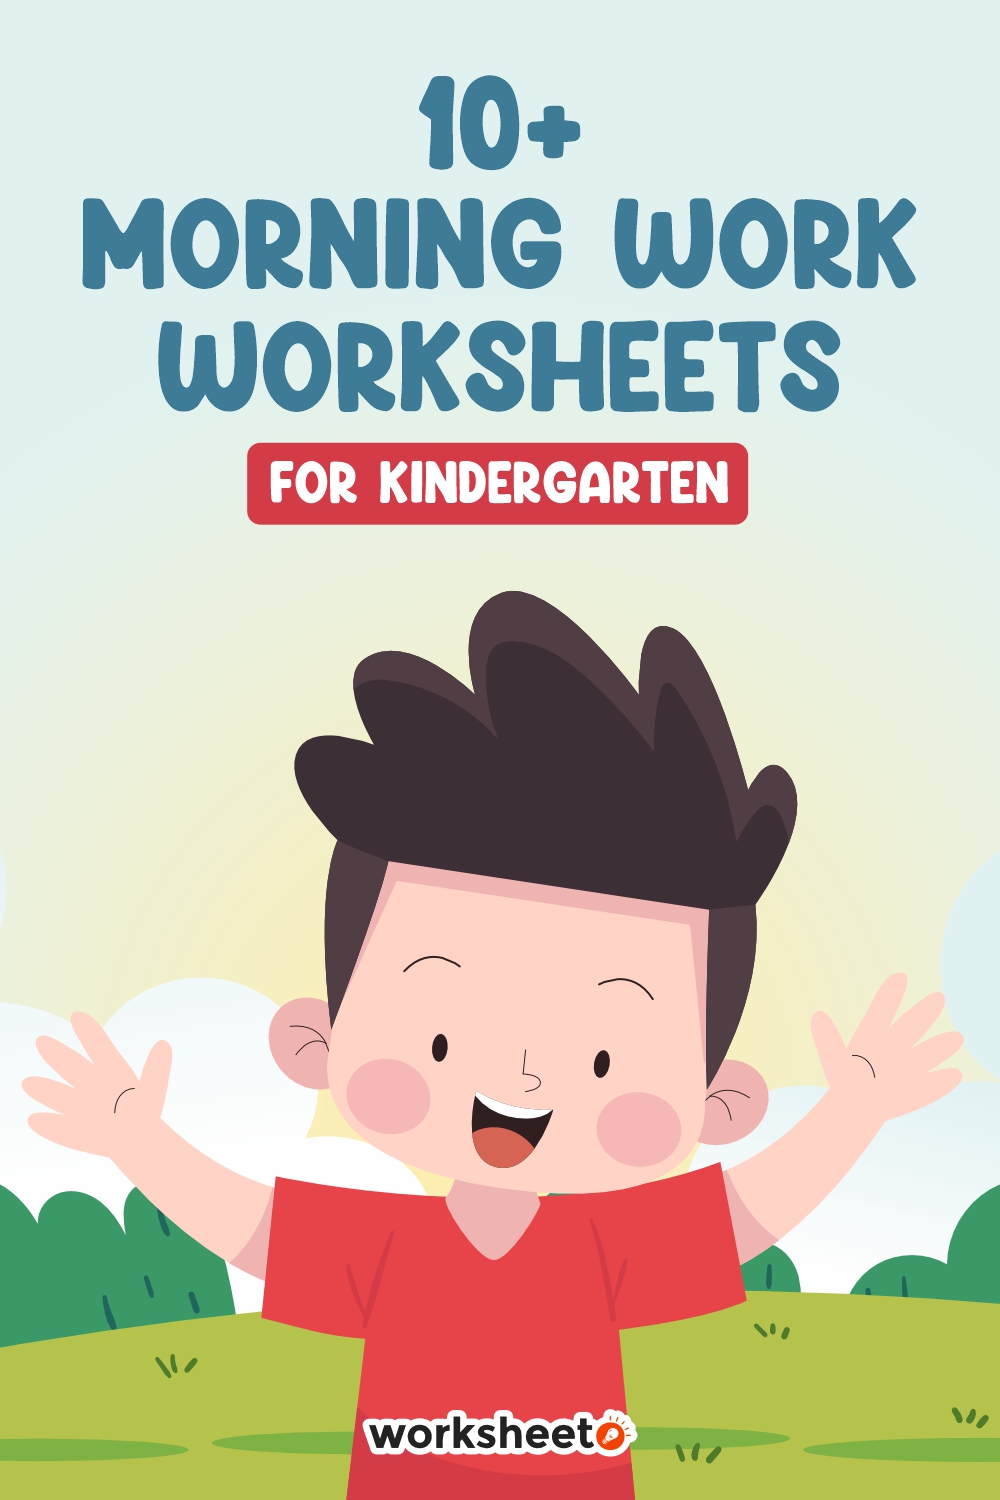 Morning Work Worksheets for Kindergarten